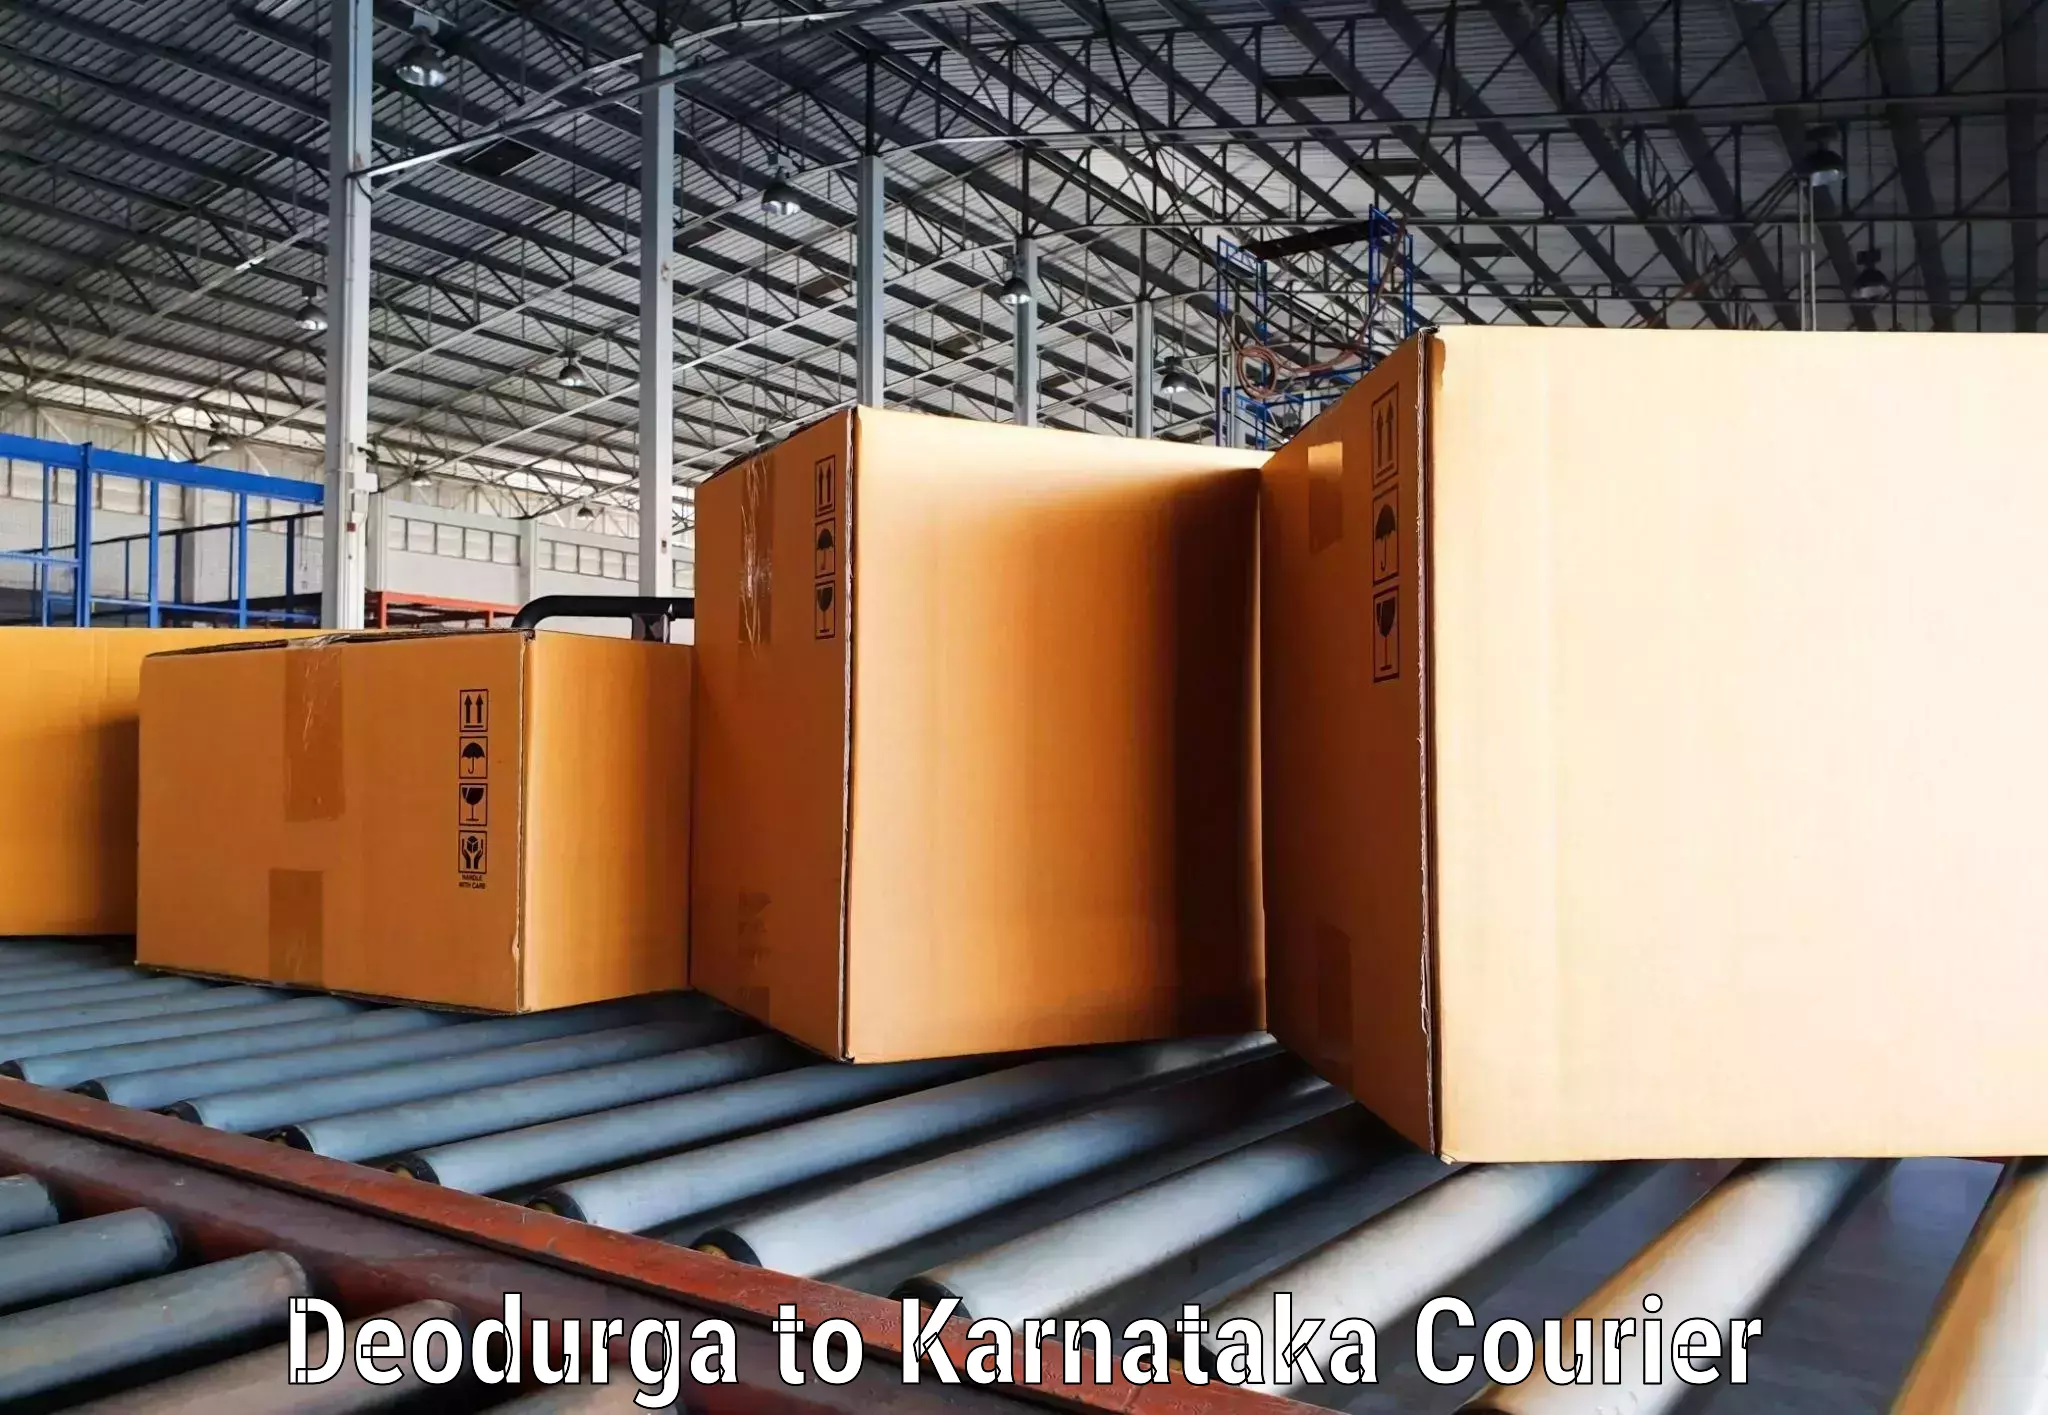 Courier service innovation Deodurga to Karkala